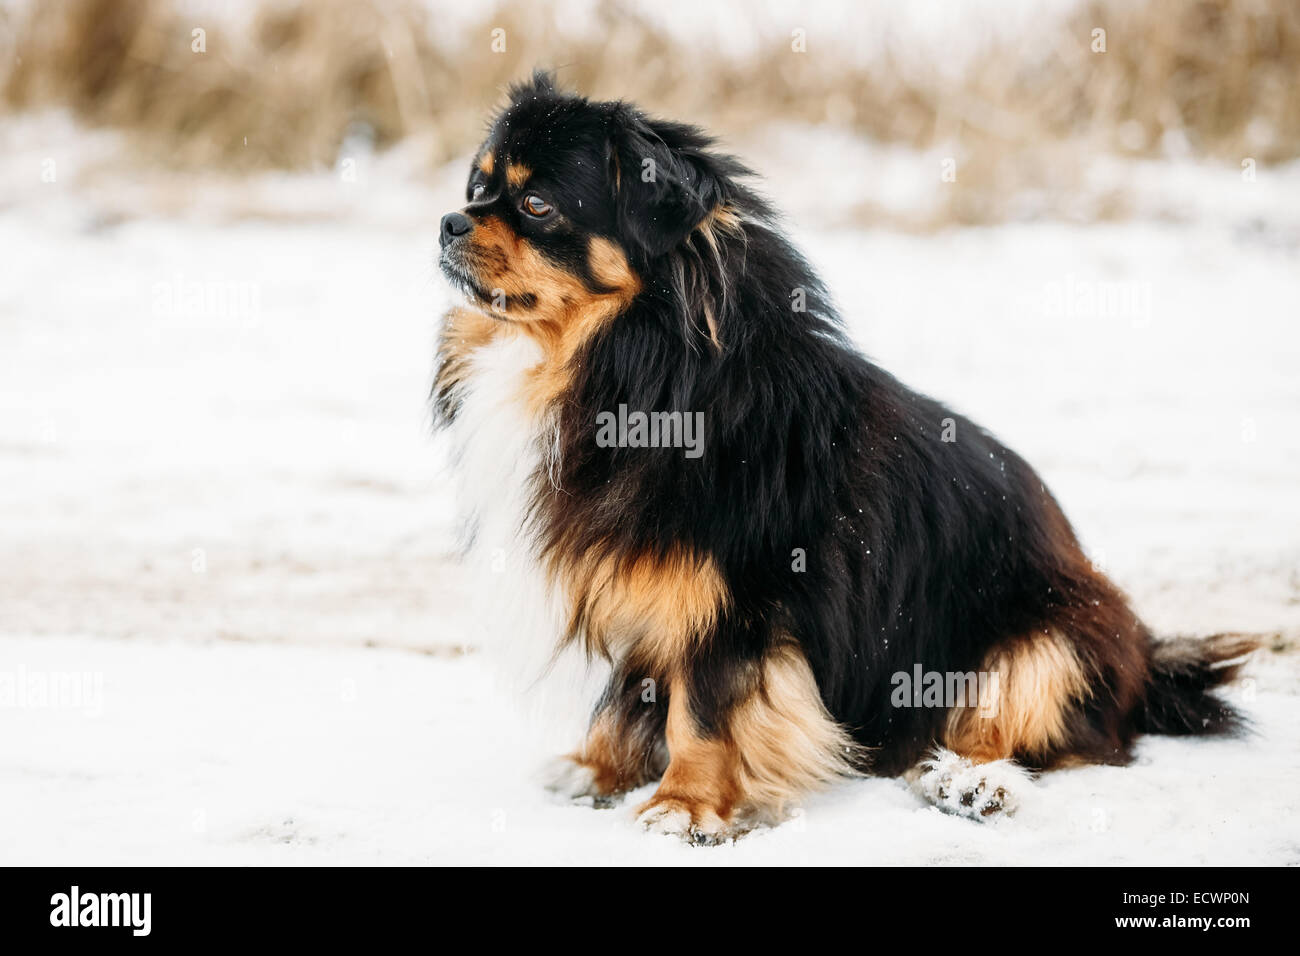 Black And Brown Colors Pekingese Pekinese Peke Whelp Puppy Dog Sitting On Snow Stock Photo